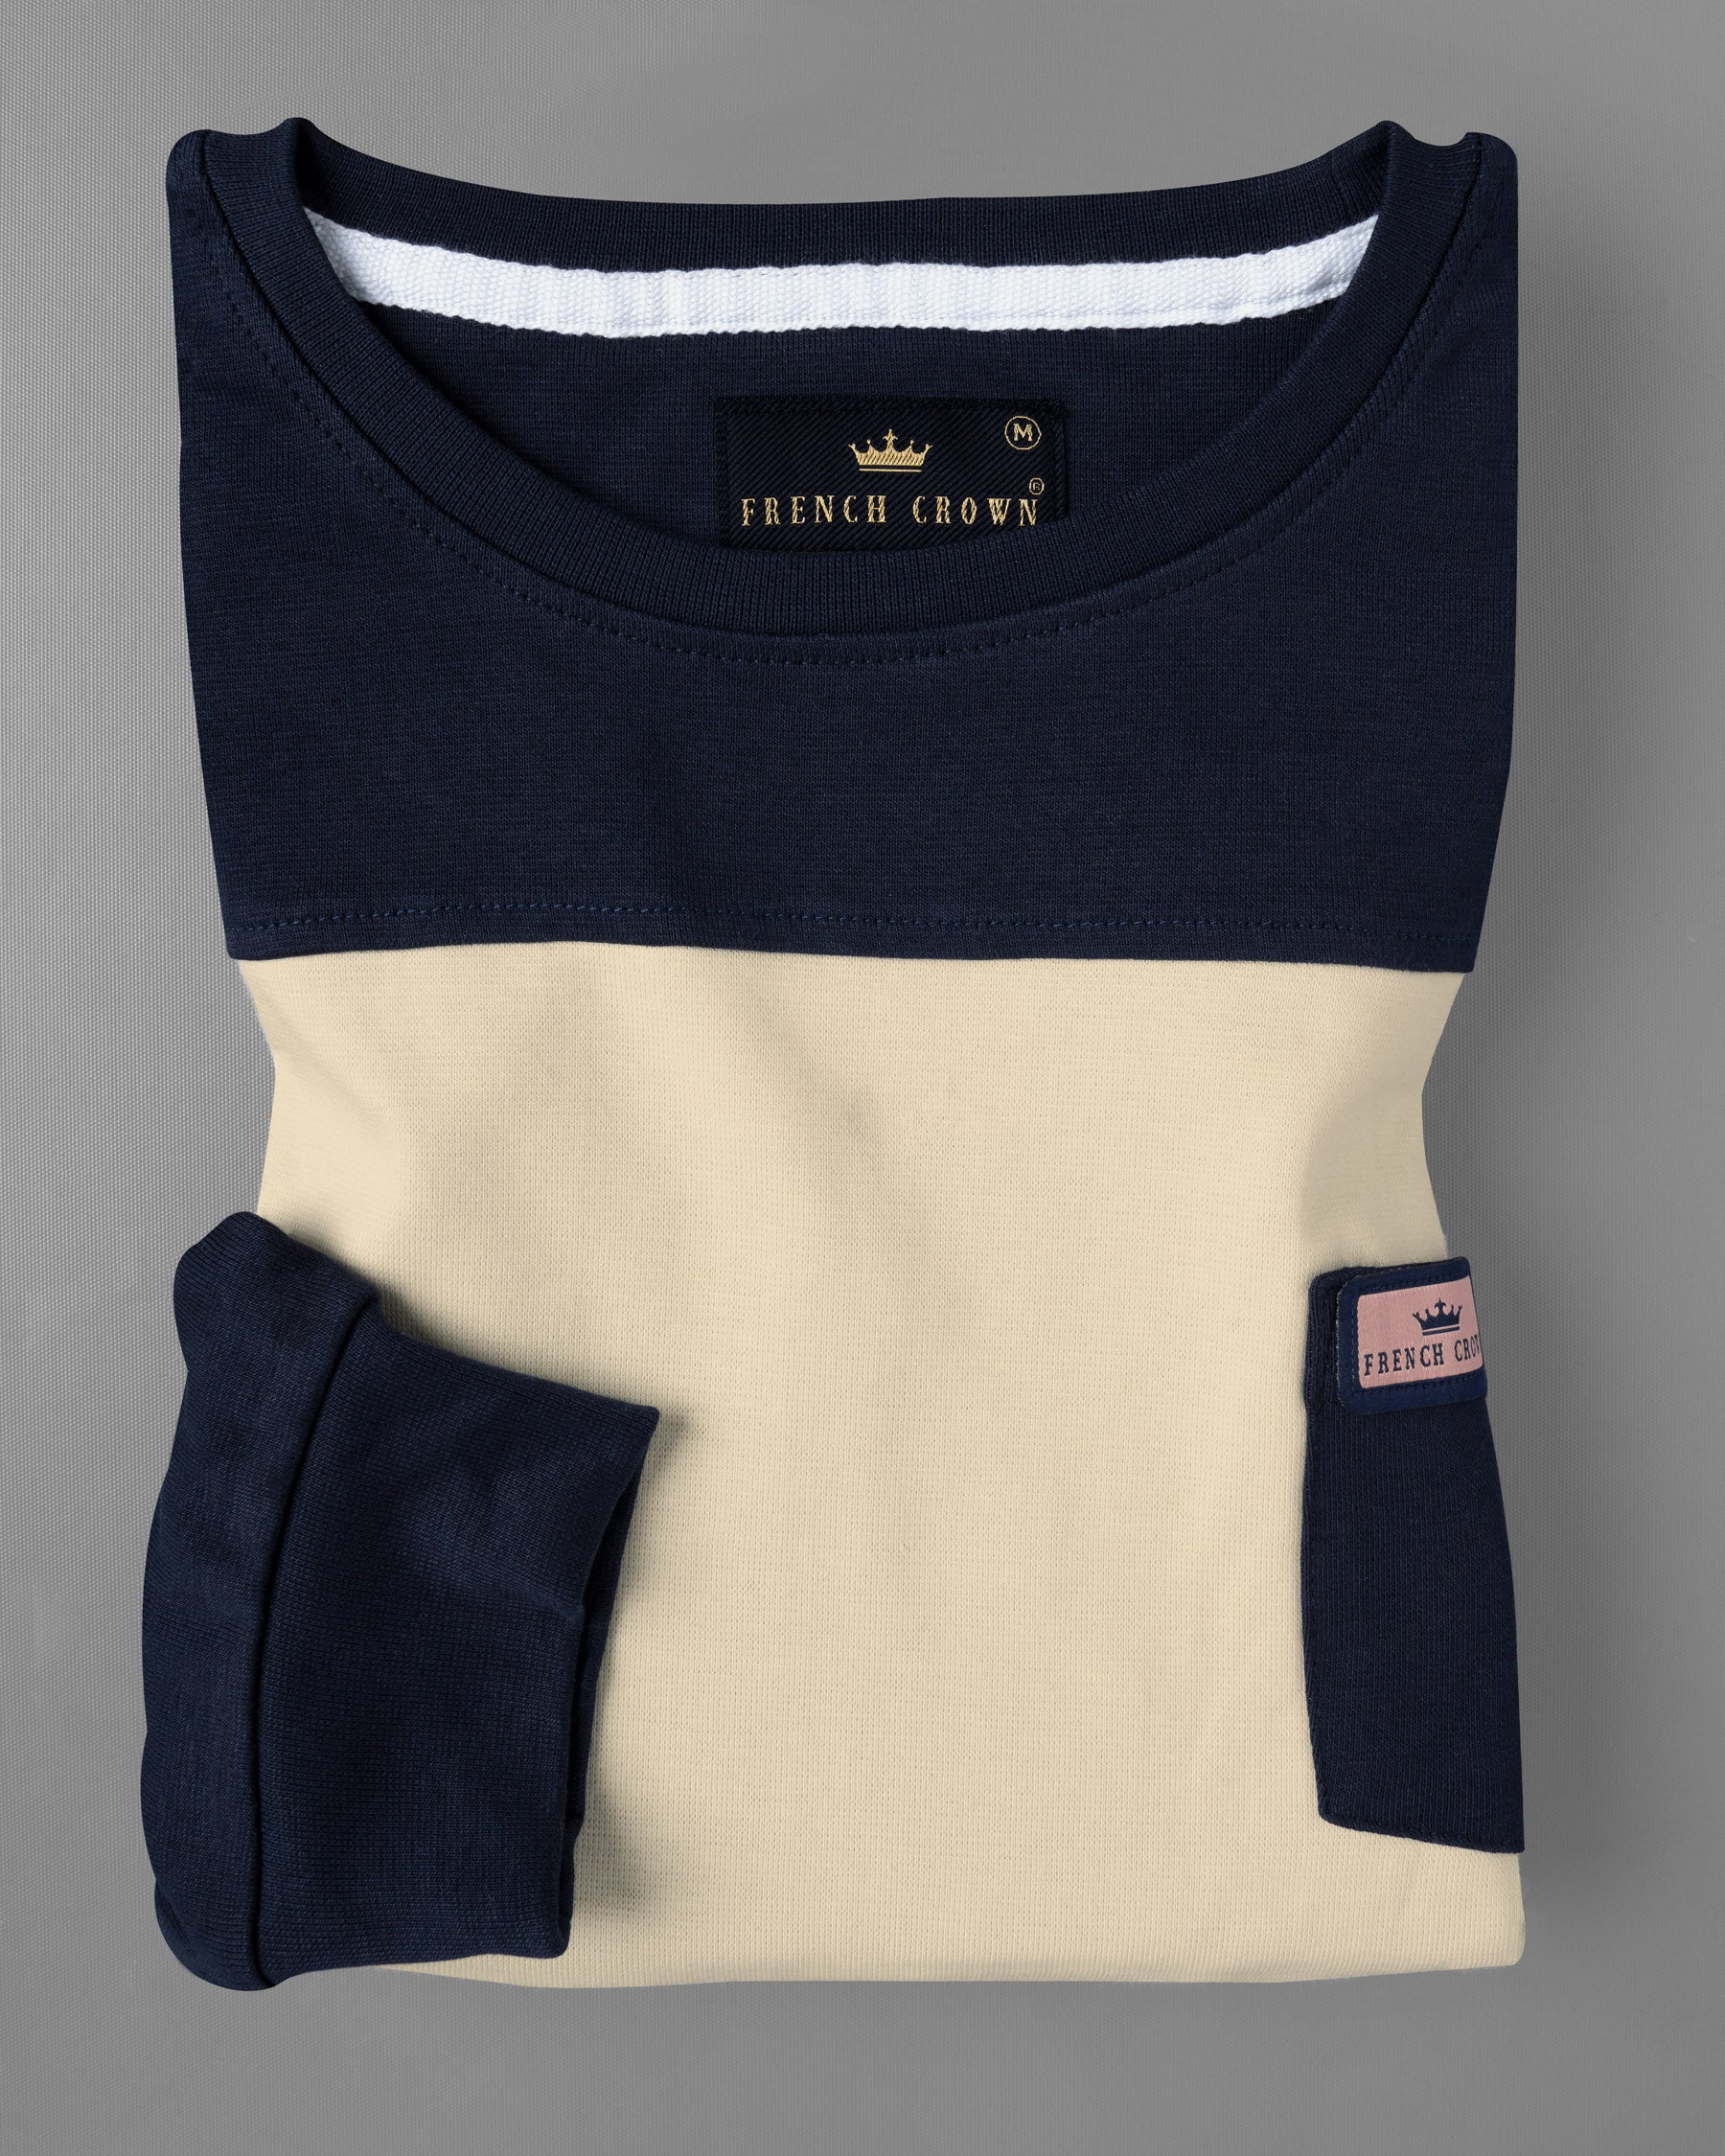 Givry with Mirage Blue Full Sleeve Premium Cotton Jersey Sweatshirt TS502-S, TS502-M, TS502-L, TS502-XL, TS502-XXL